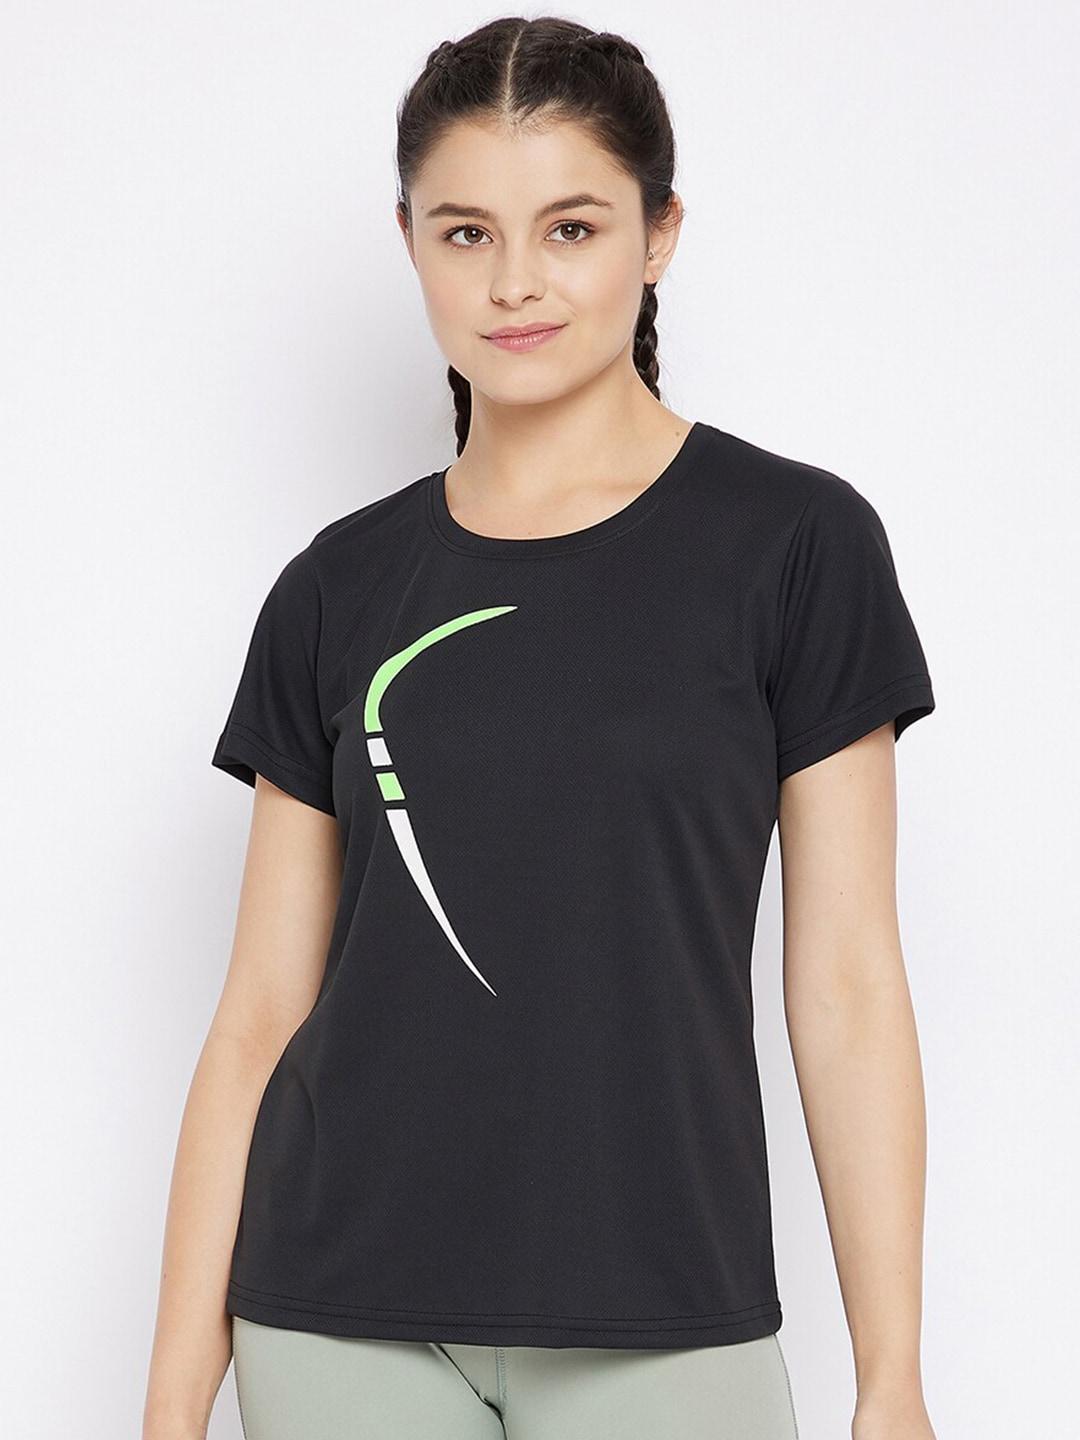 clovia-women-black-solid-training-or-gym-t-shirt